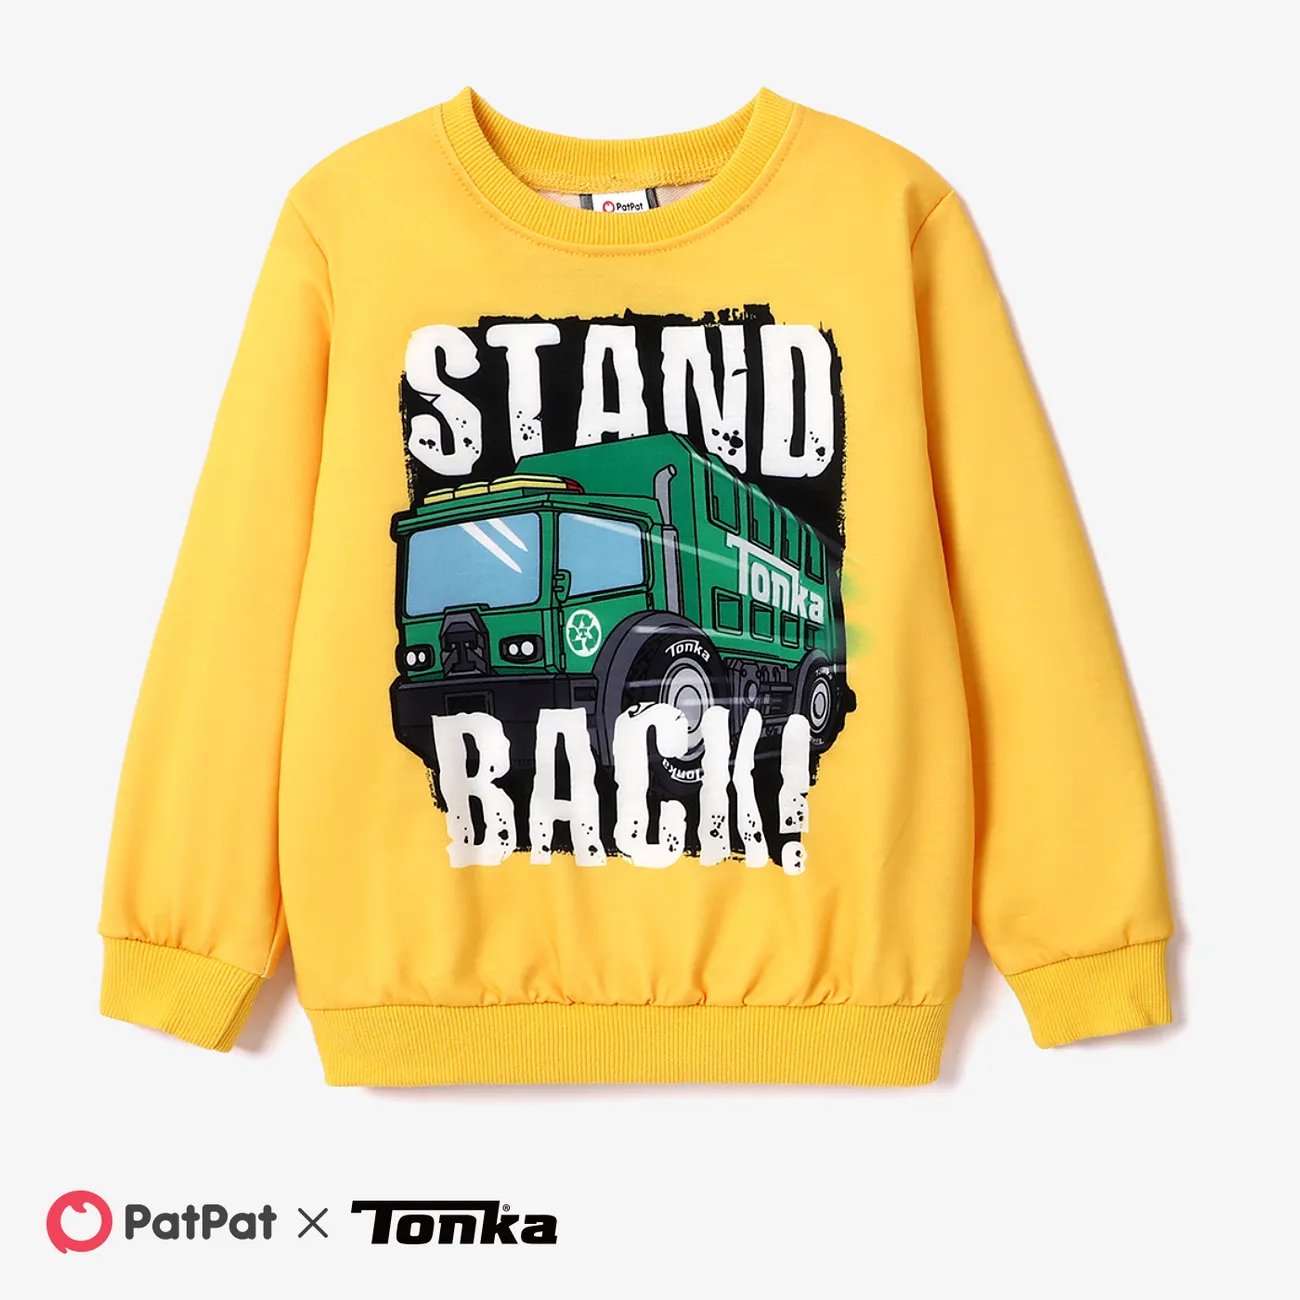 Tonka 1pcs Toddler Boy Character Print Sweatshirt or Elasticized Pants Only  $9.99 PatPat US Mobile